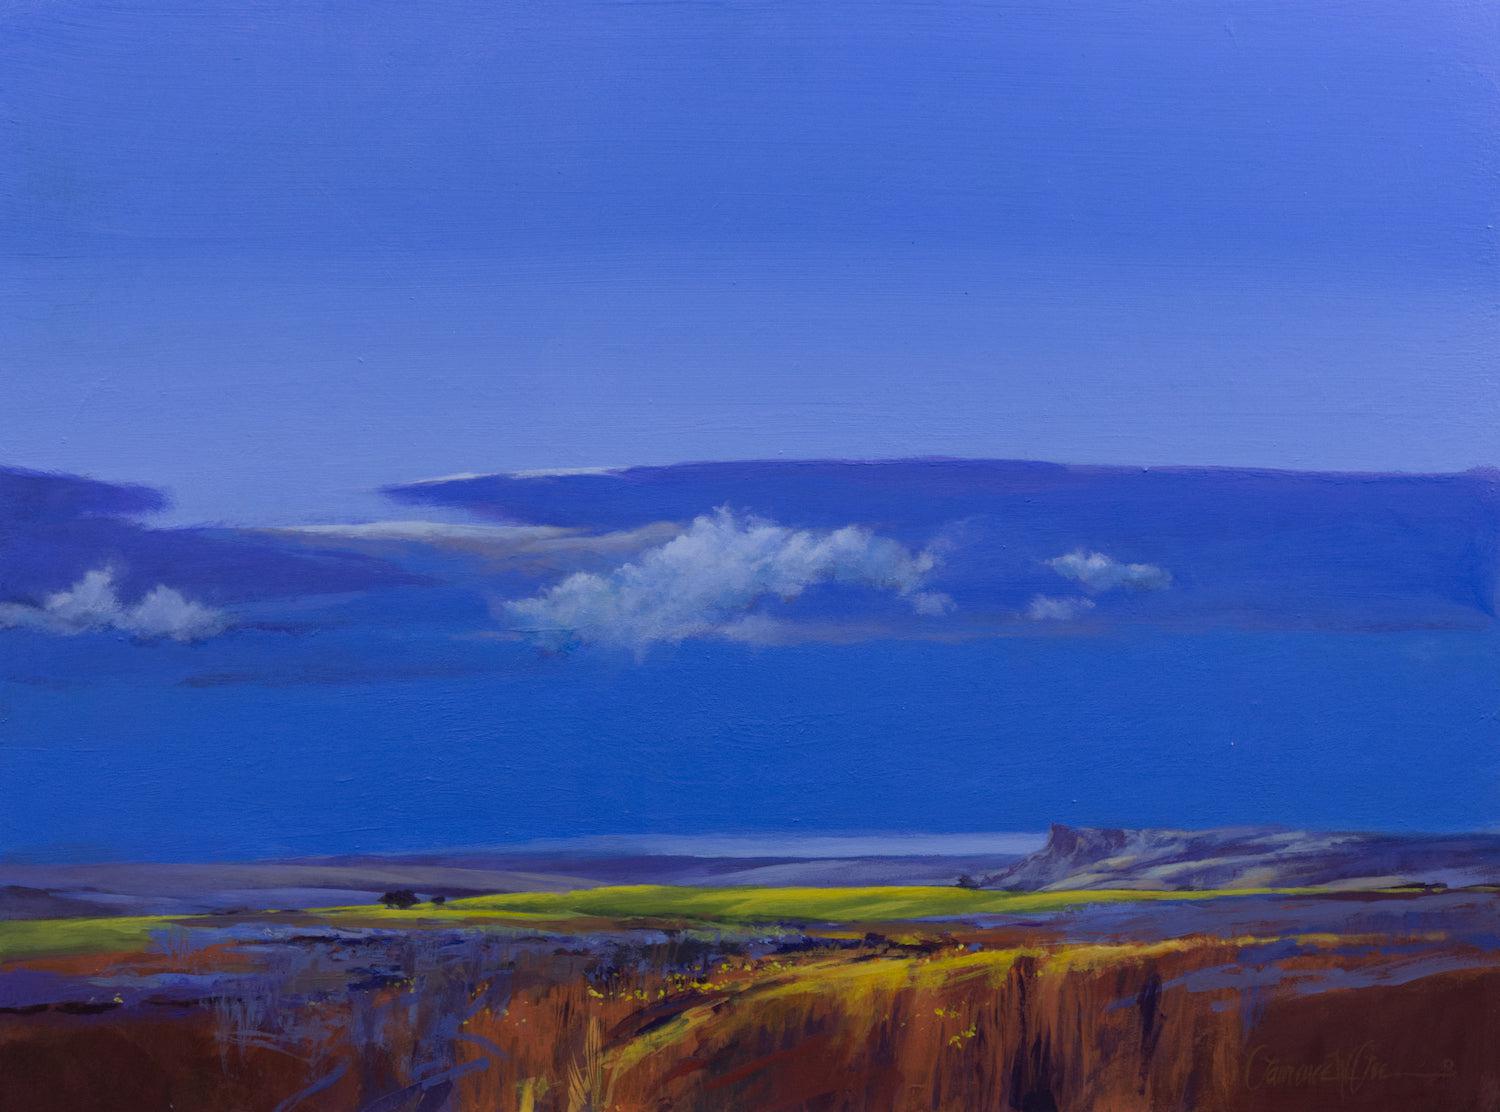 Dreamland Afternoon-Painting-Lawrence Lee-Sorrel Sky Gallery